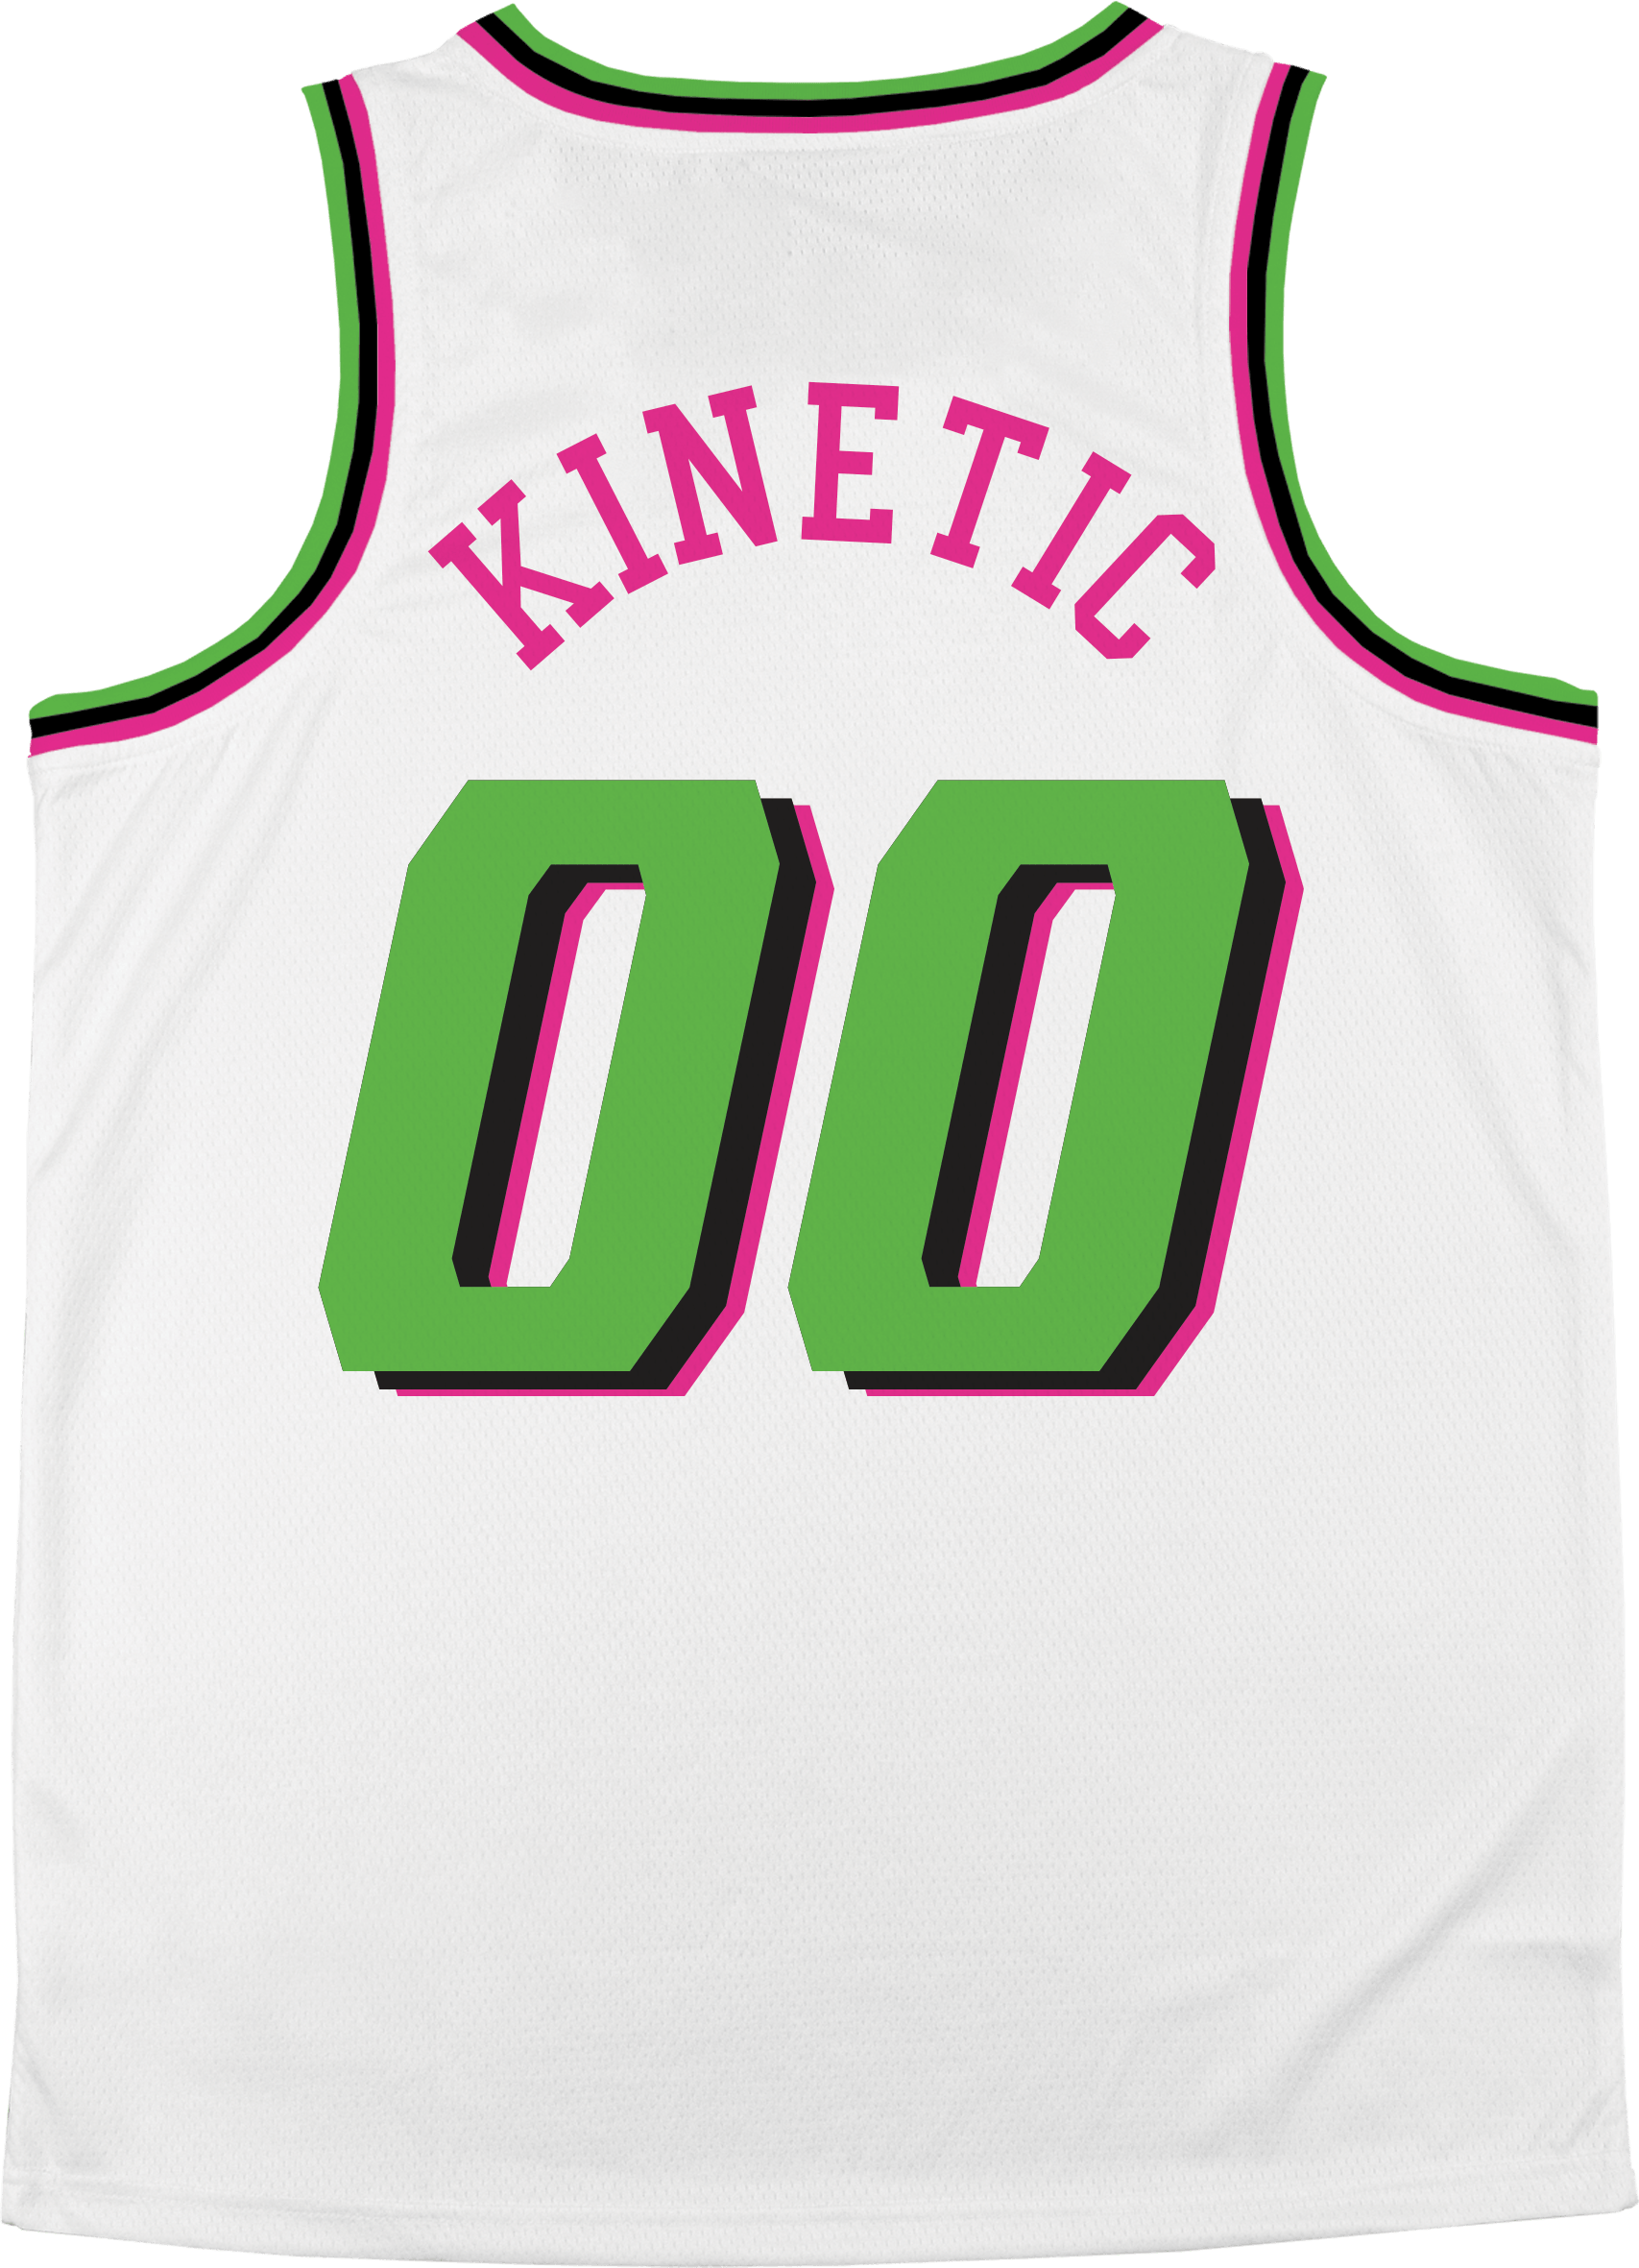 Delta Sigma Phi - Bubble Gum Basketball Jersey - Kinetic Society